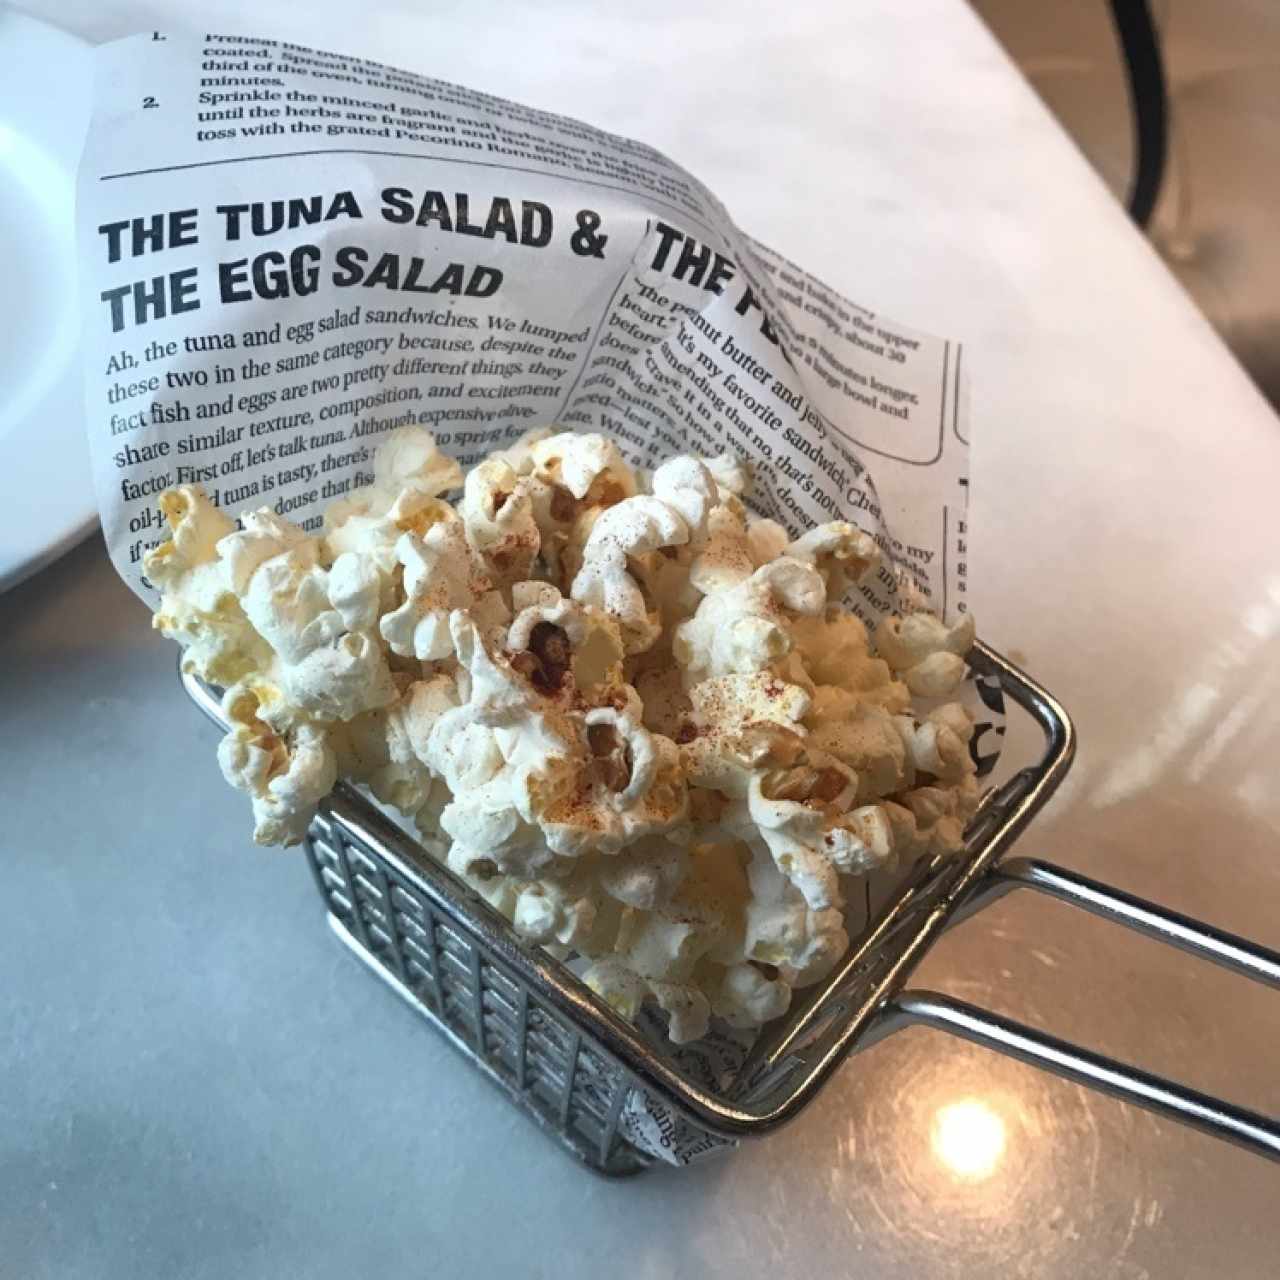 popcorn de cortesia